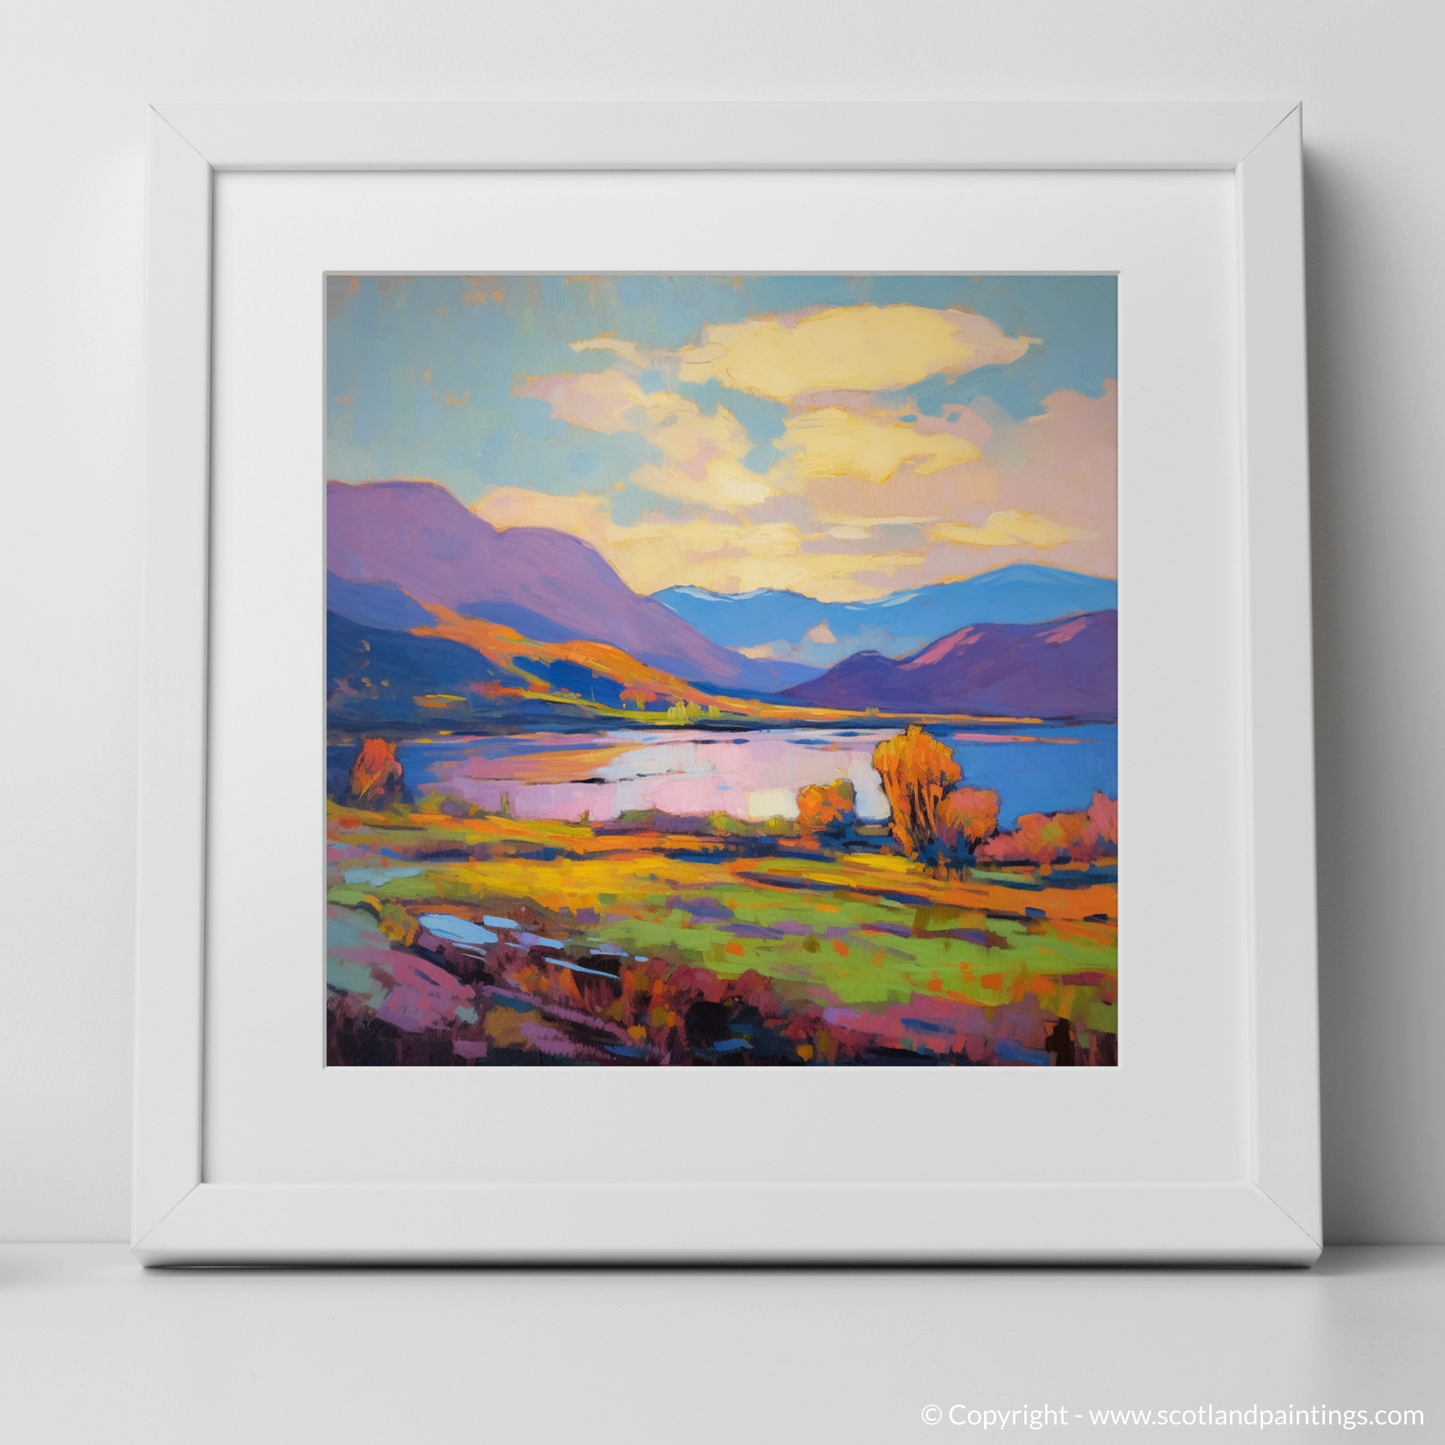 Highland Serenity: Sunset over Loch Insh